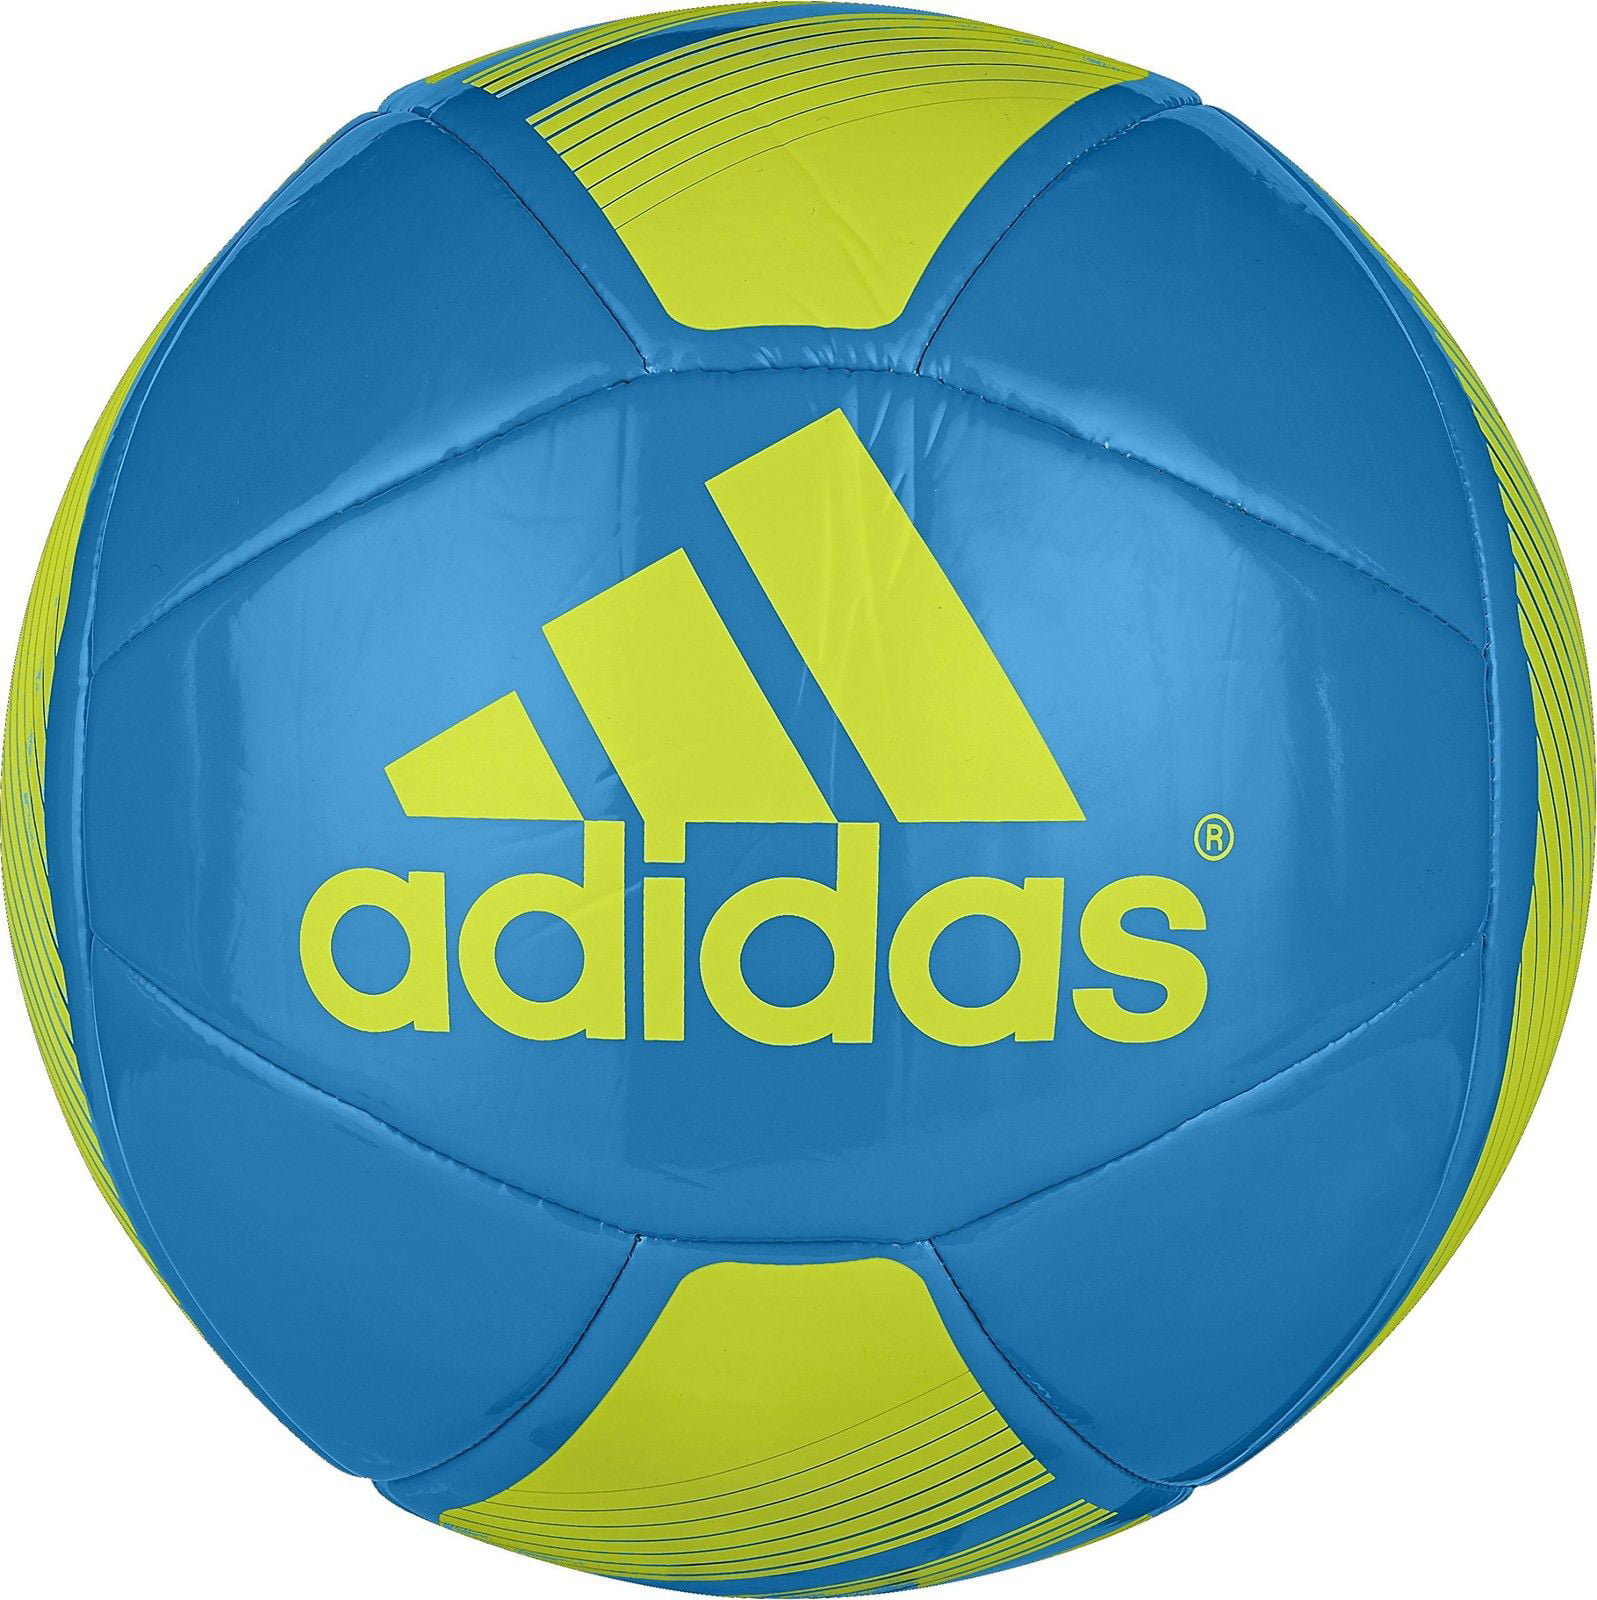 adidas EPP Glider Soccer Ball - Walmart.com